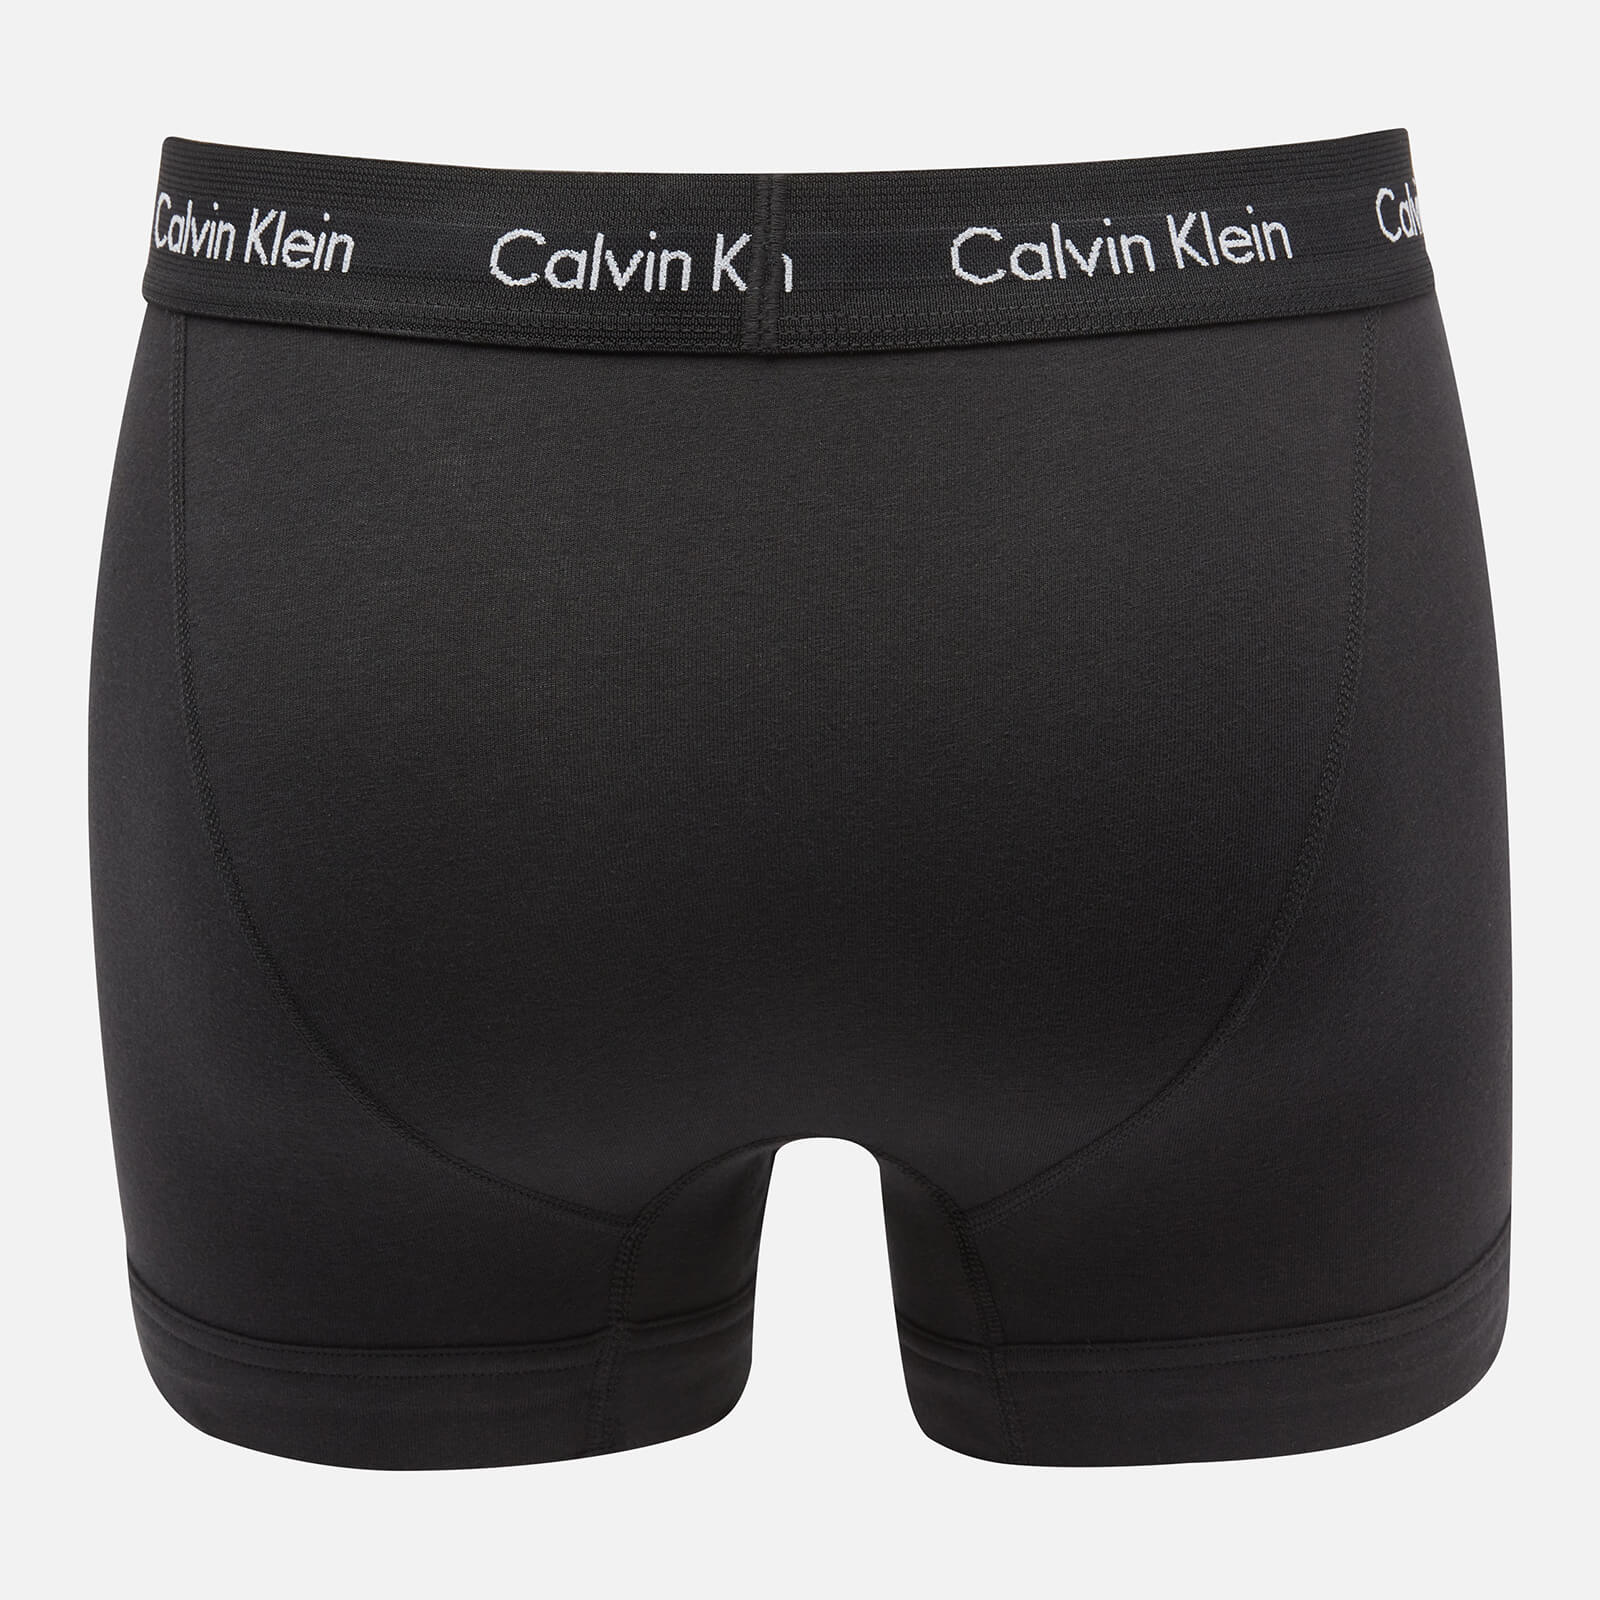 Calvin Klein Men's Cotton Stretch 3-Pack Trunks - Black/Blue/Blue - L